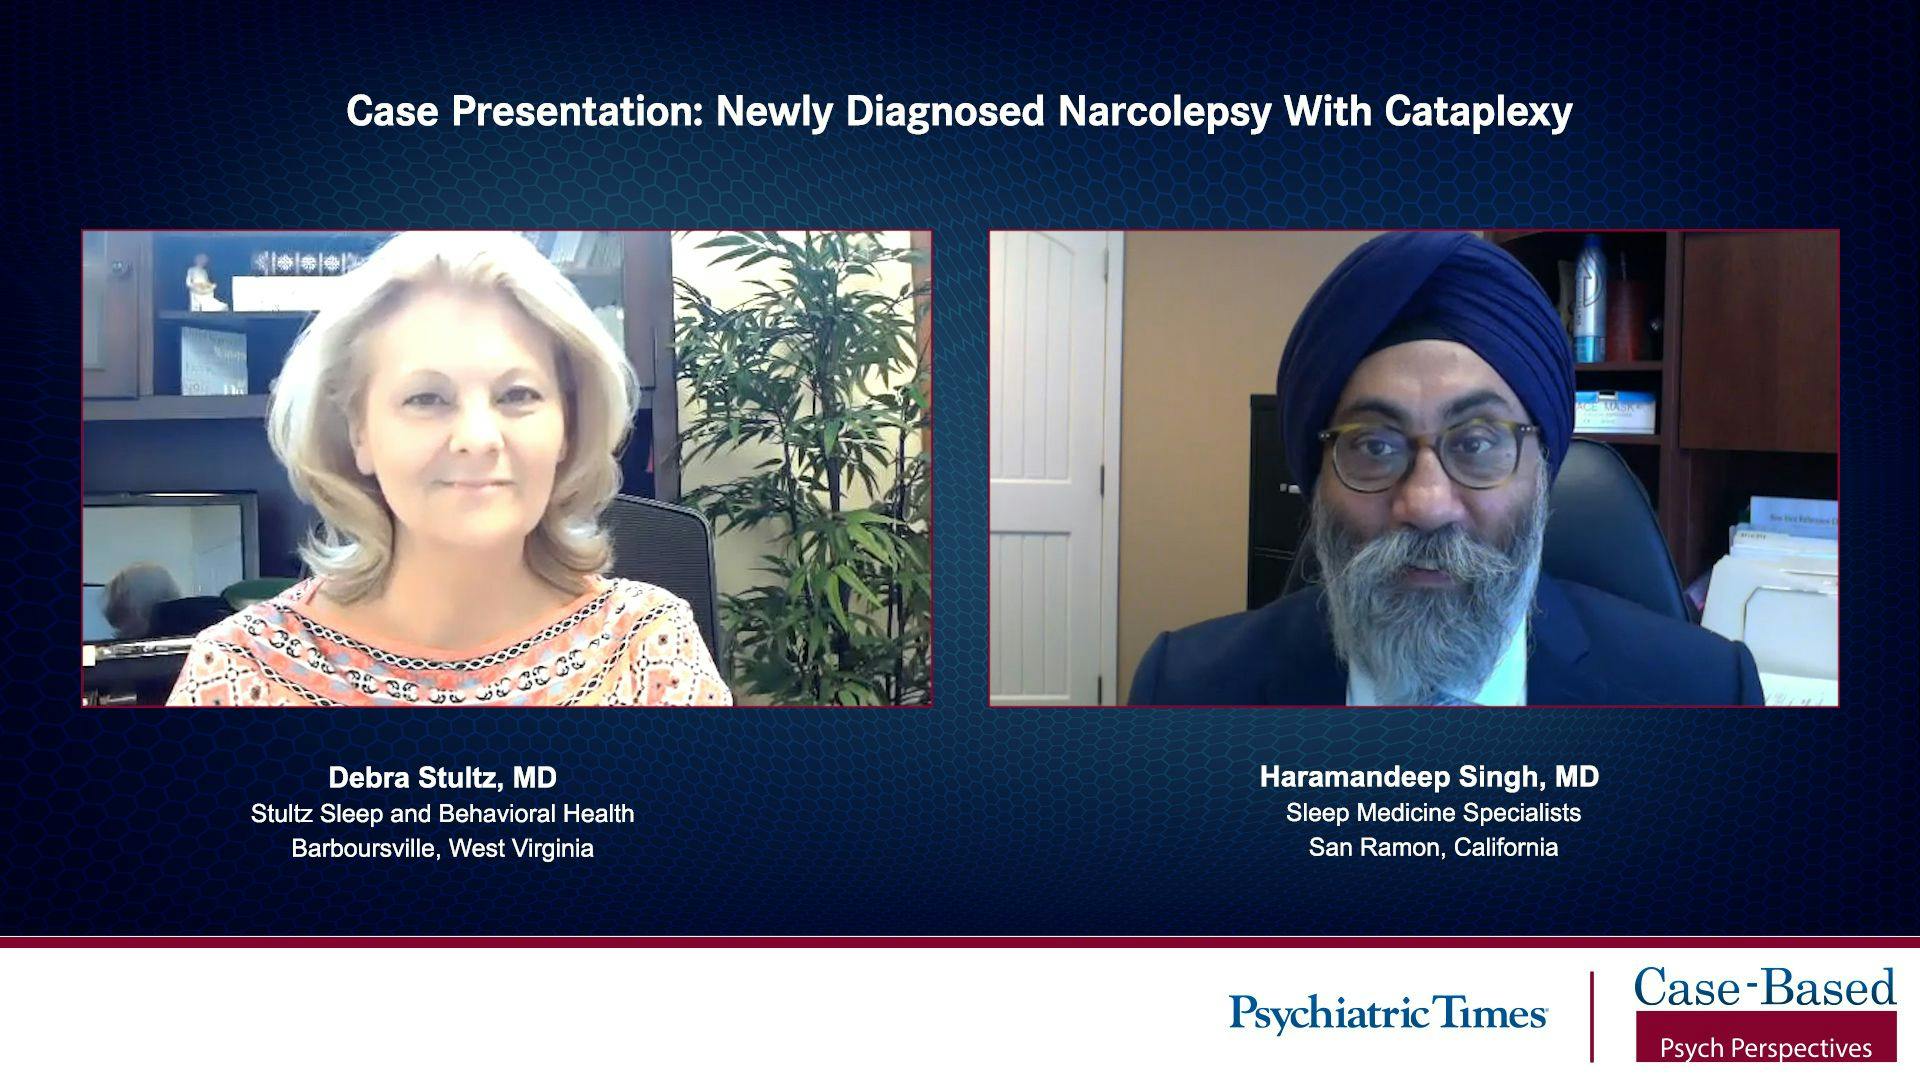 Case Presentation: Newly Diagnosed Narcolepsy With Cataplexy